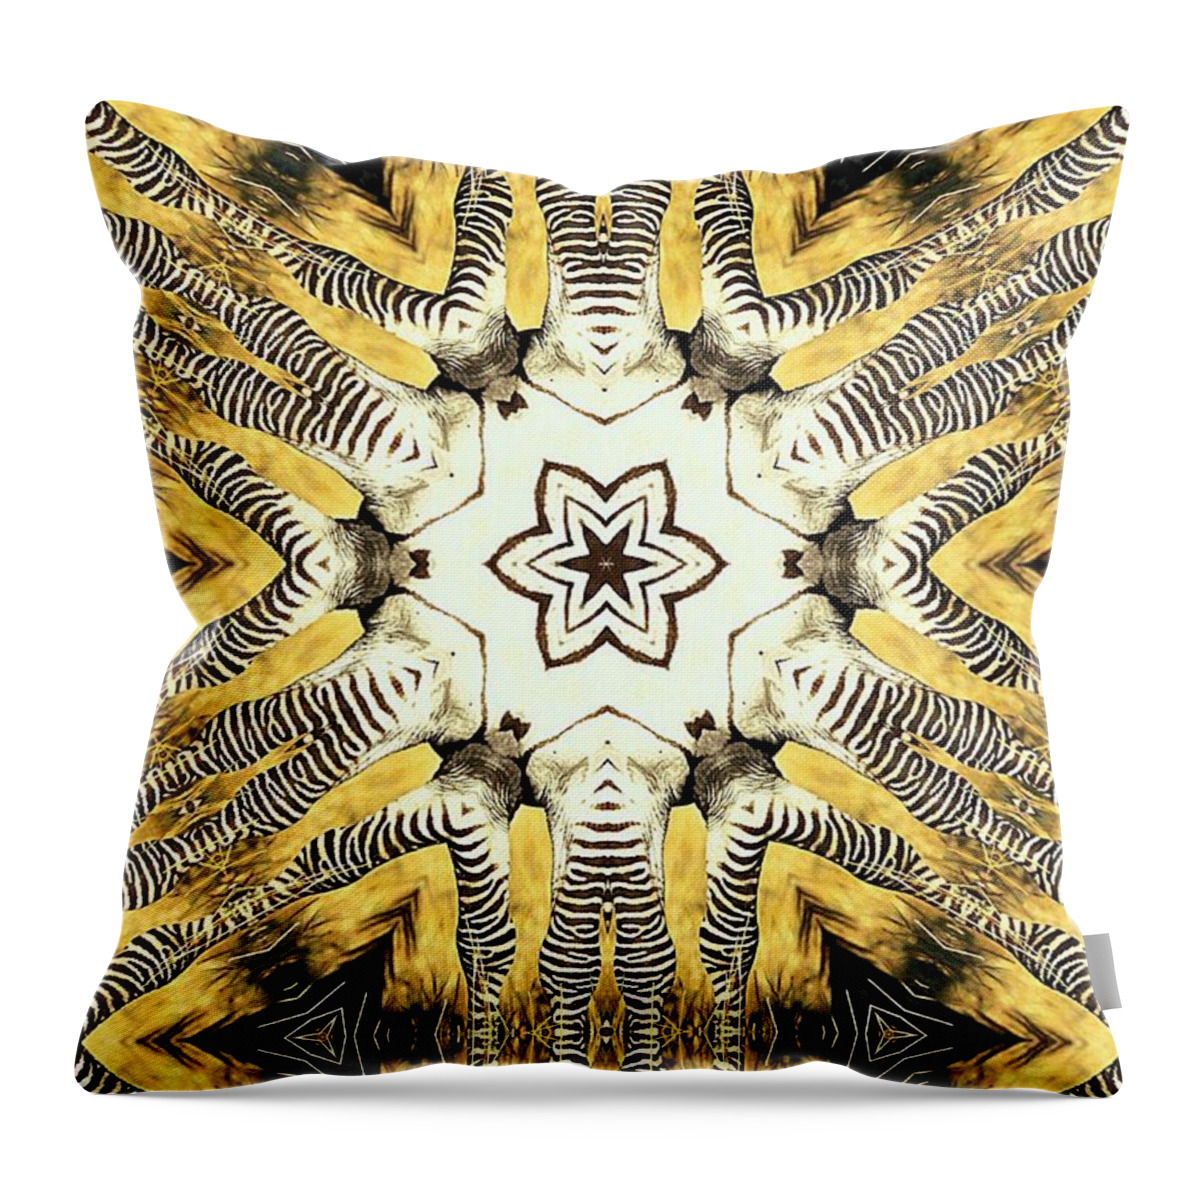 Digital Throw Pillow featuring the digital art Zebra I by Maria Watt